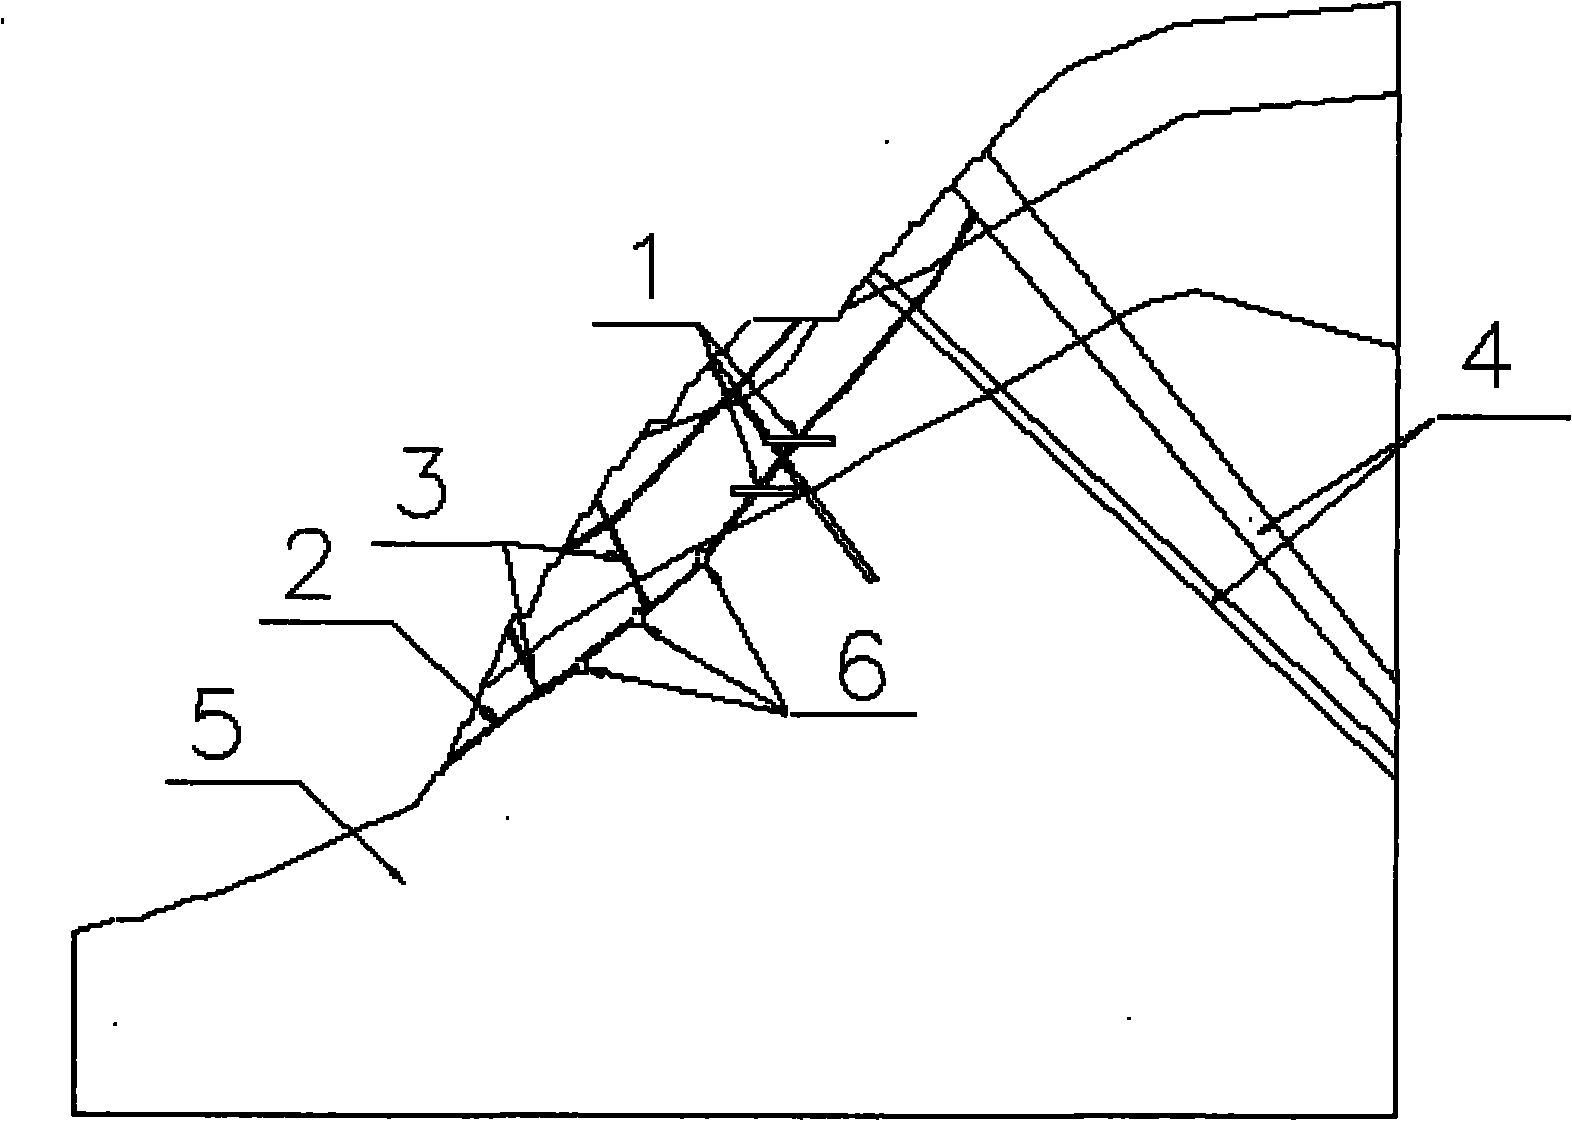 Method for designing anchoring hole structure for reinforcing rock slope